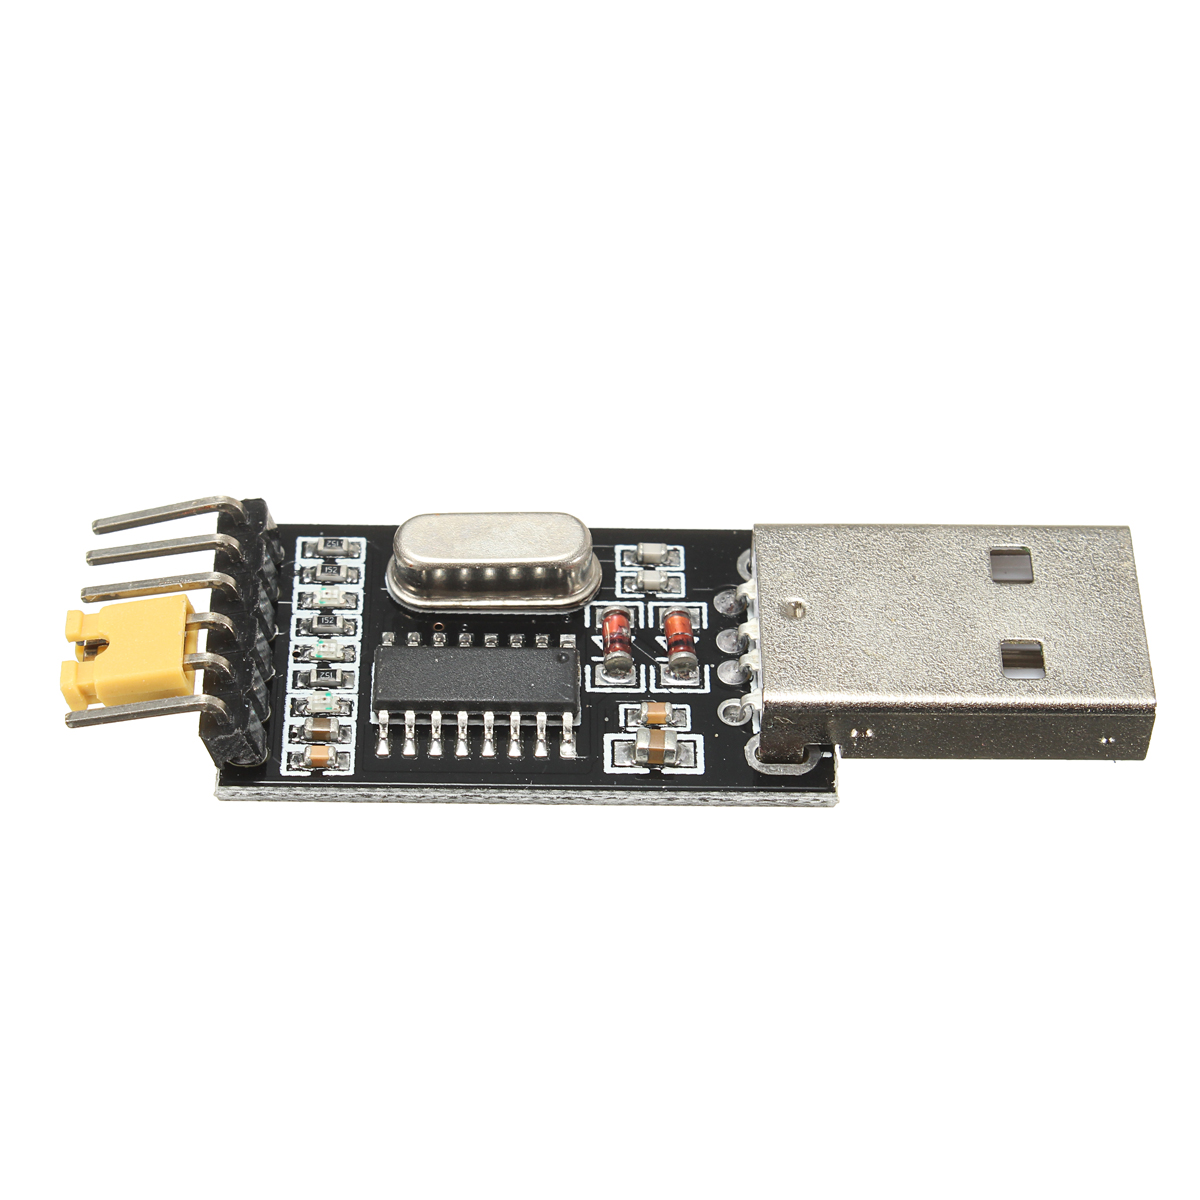 5pcs-33V-5V-USB-to-TTL-Convertor-CH340G-UART-Serial-Adapter-Module-STC-1314966-4